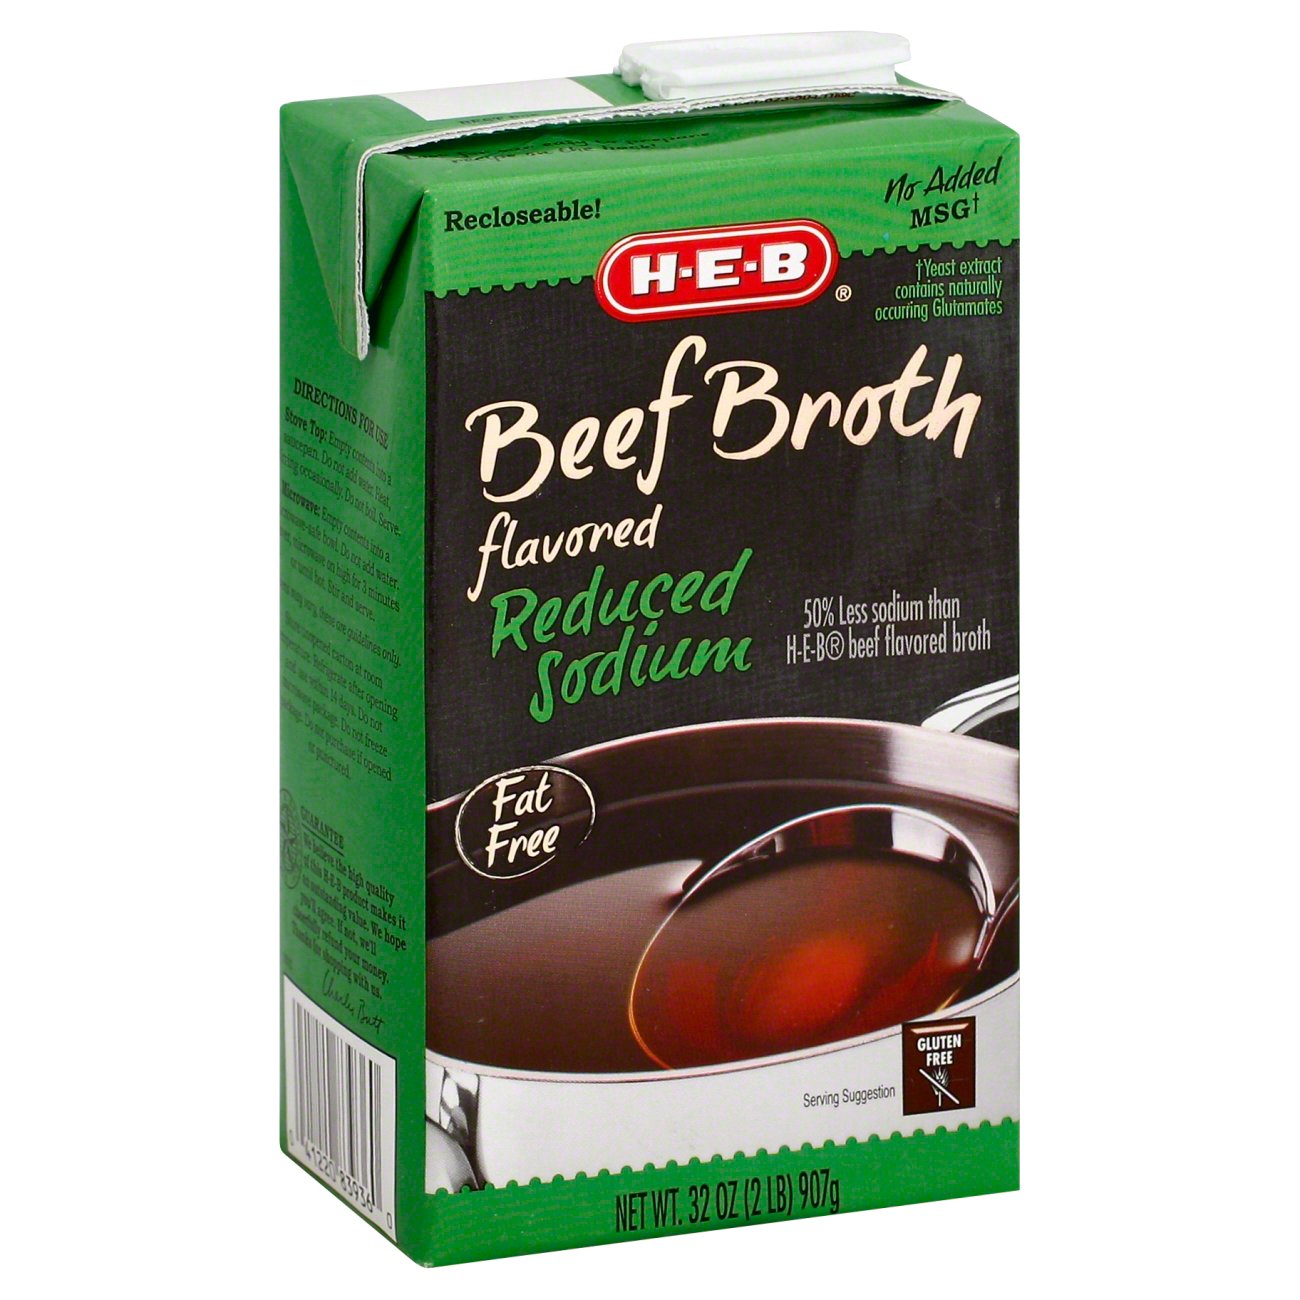 H-E-B Reduced Sodium Beef Broth - Shop Broth & Bouillon at H-E-B